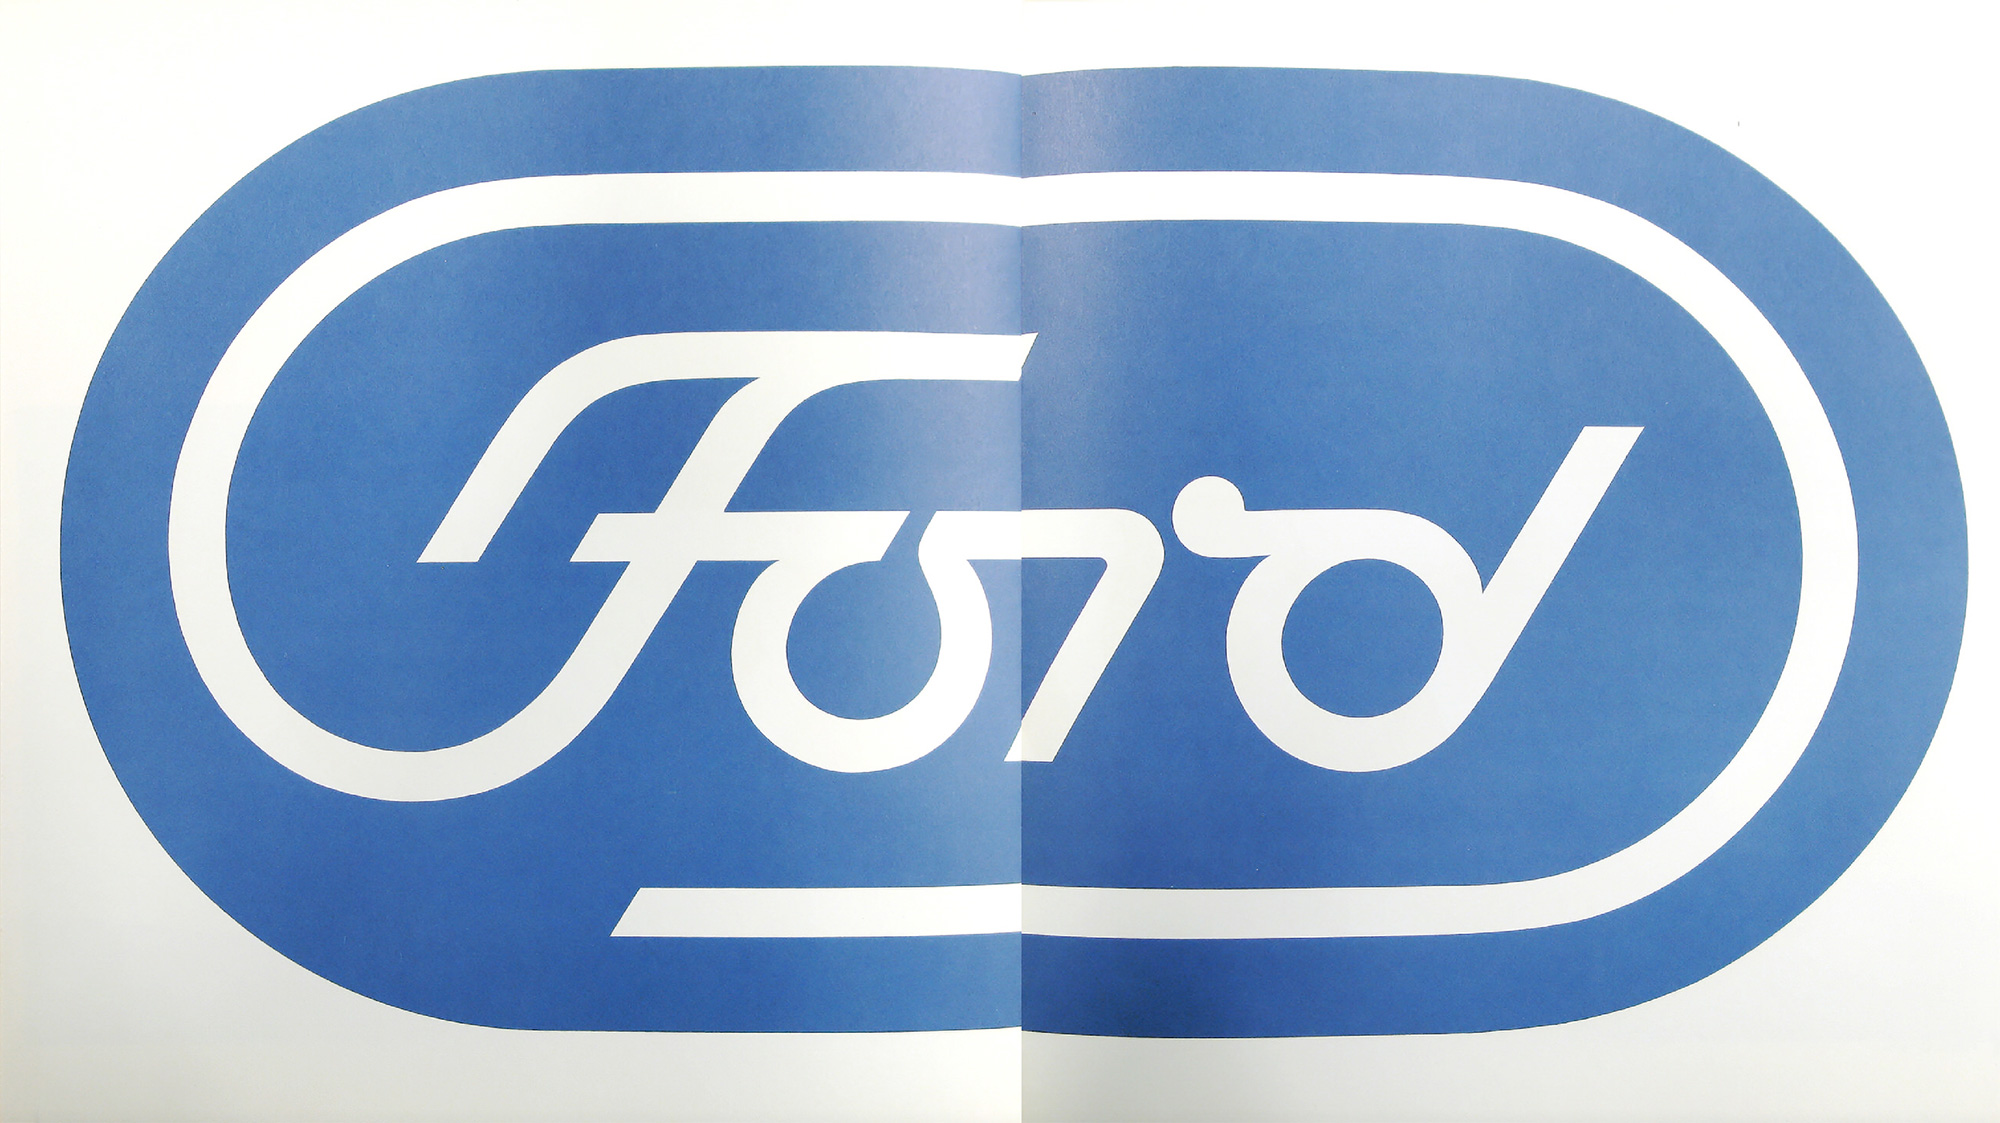 Presentasi logo Ford oleh Paul Rand